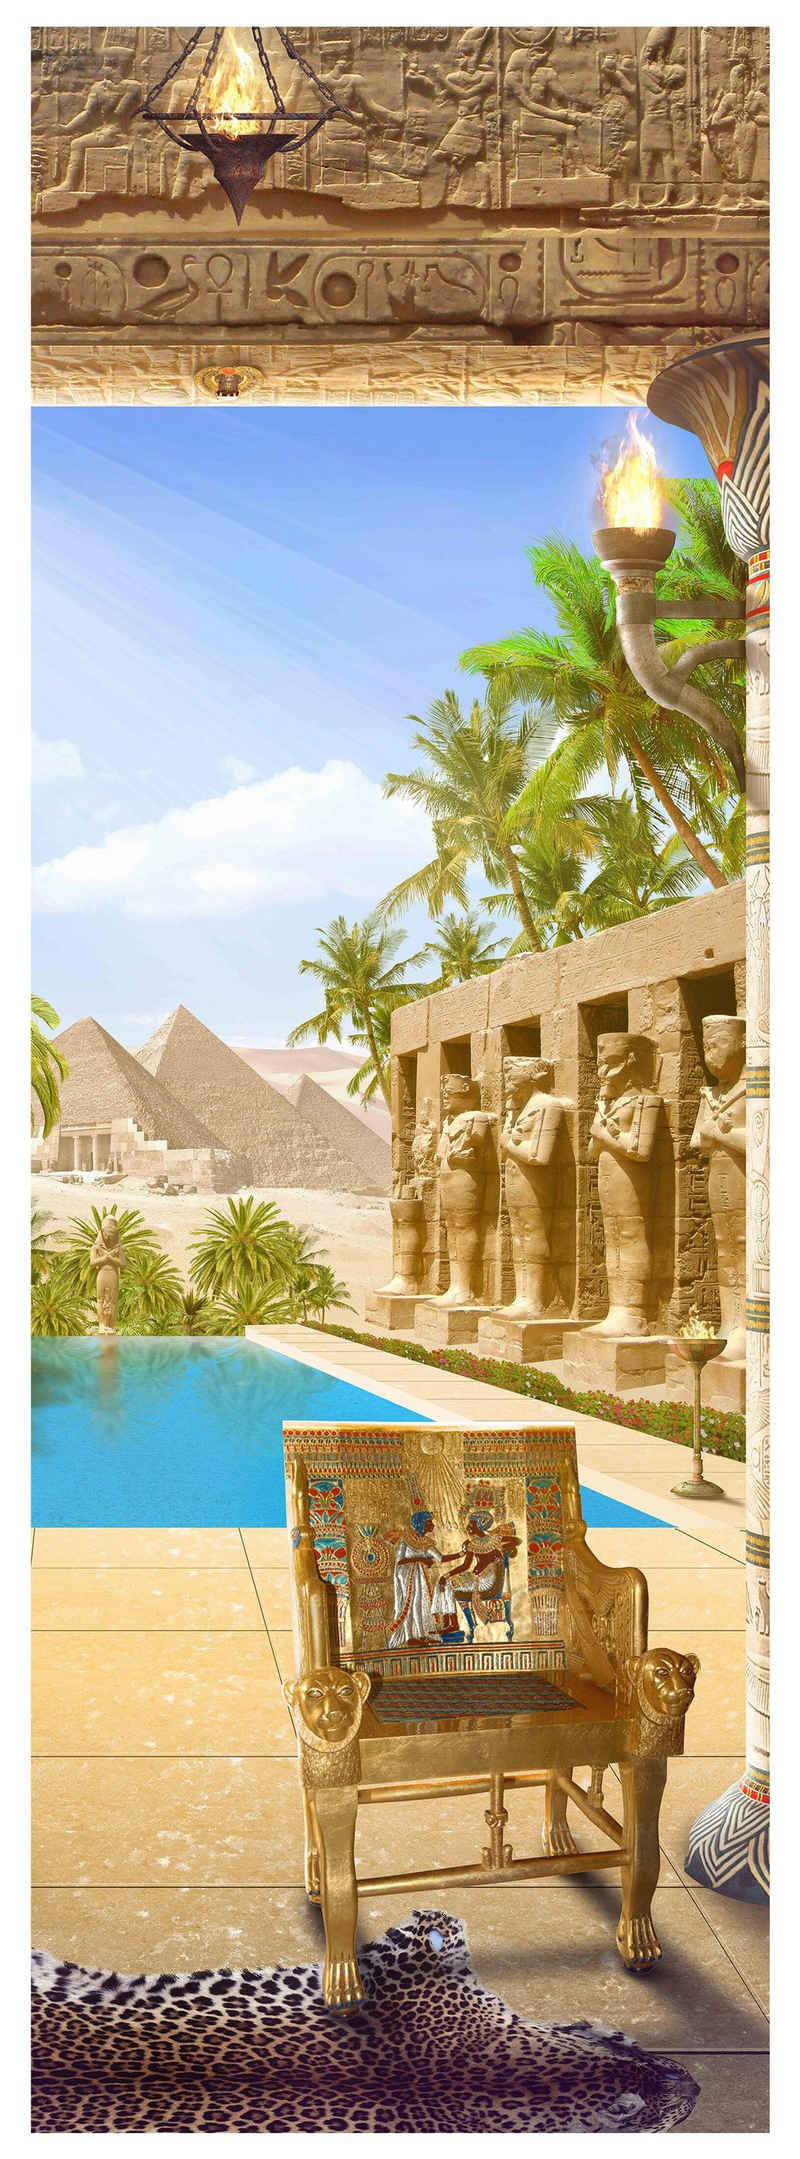 wandmotiv24 Türtapete Tal der Könige, Ägypten, Pyramiden, glatt, Fototapete, Wandtapete, Motivtapete, matt, selbstklebende Dekorfolie